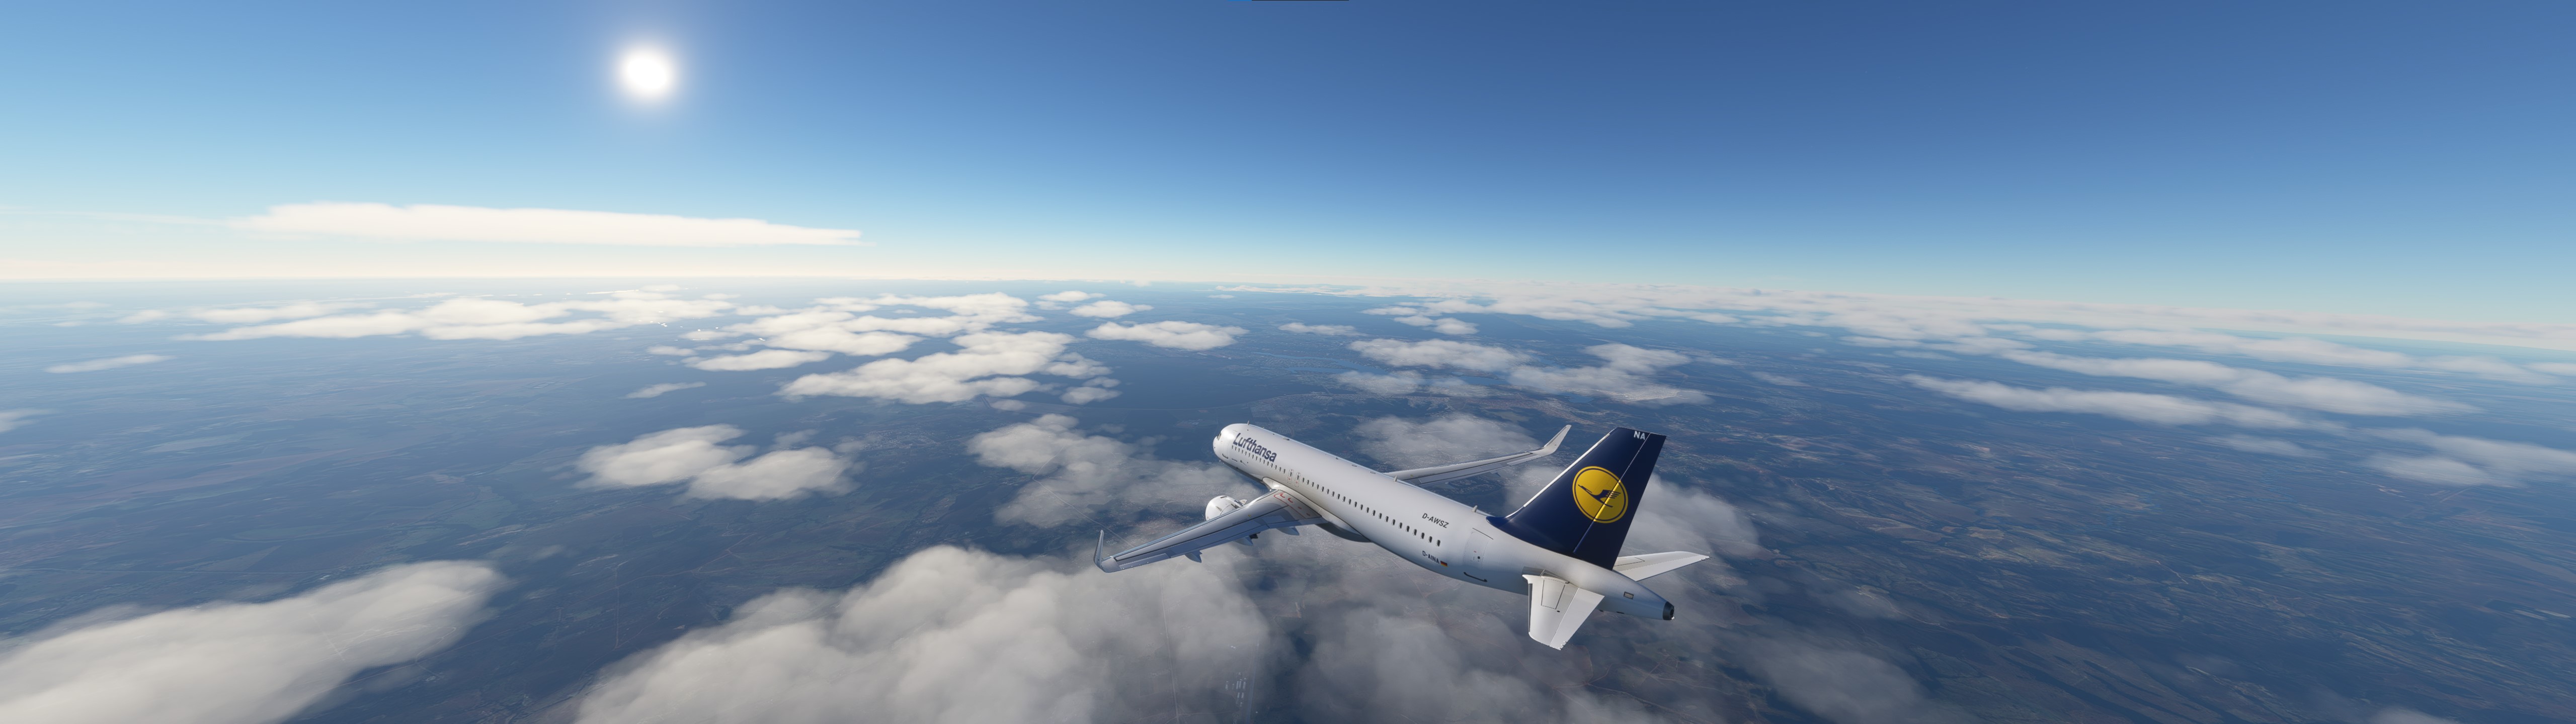 Flight Simulator Flying Sky Clouds Airbus A320 Airplane Aircraft Lufthansa 5120x1440